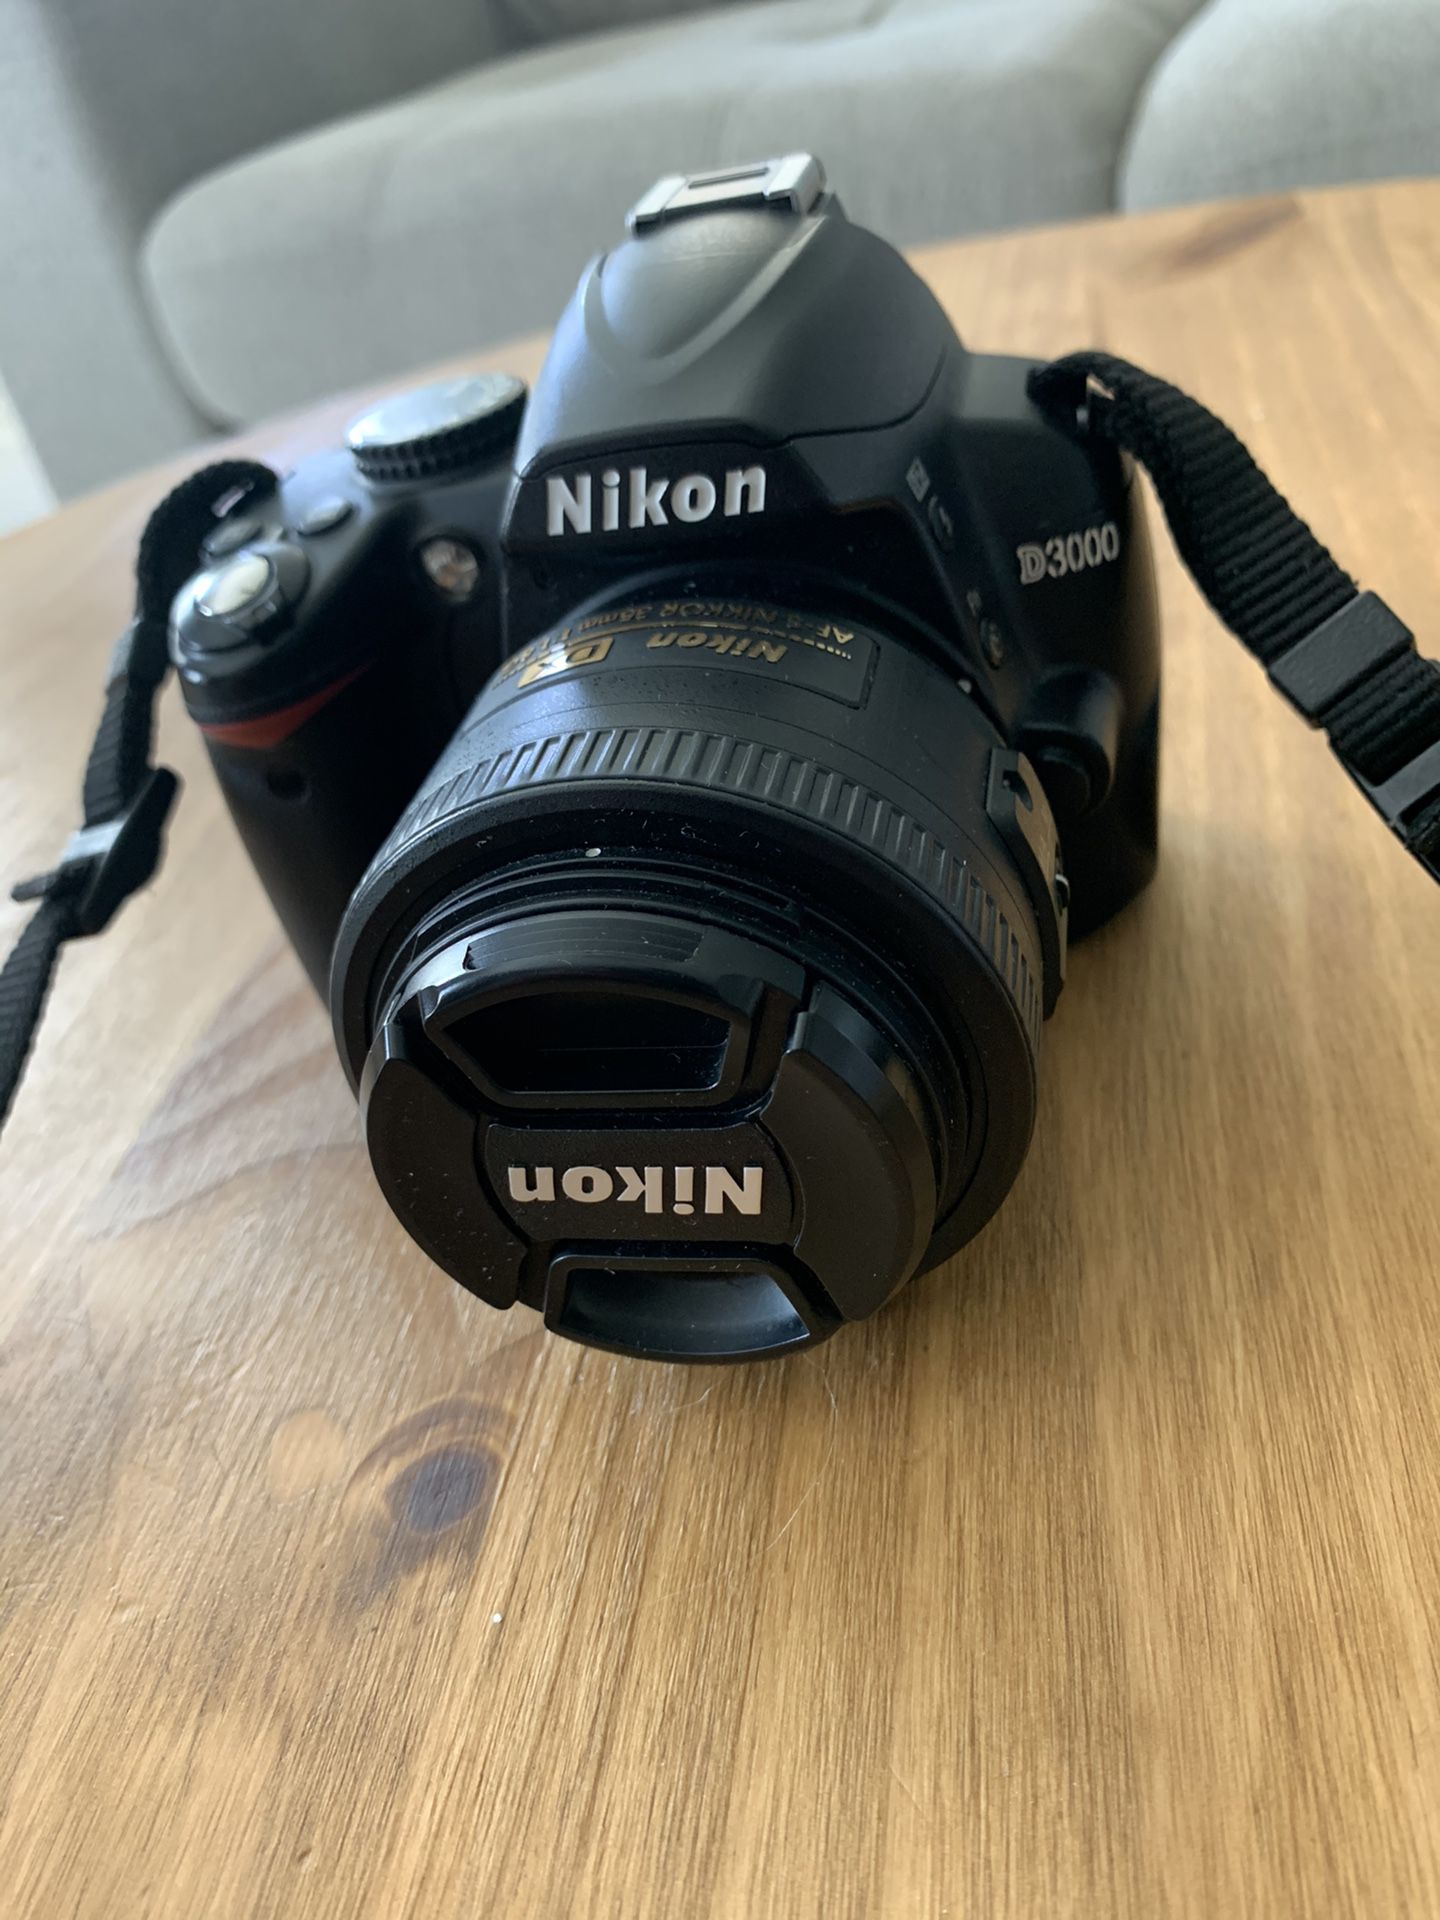 Nikon D3000 camera base with 35mm f1.8 lens